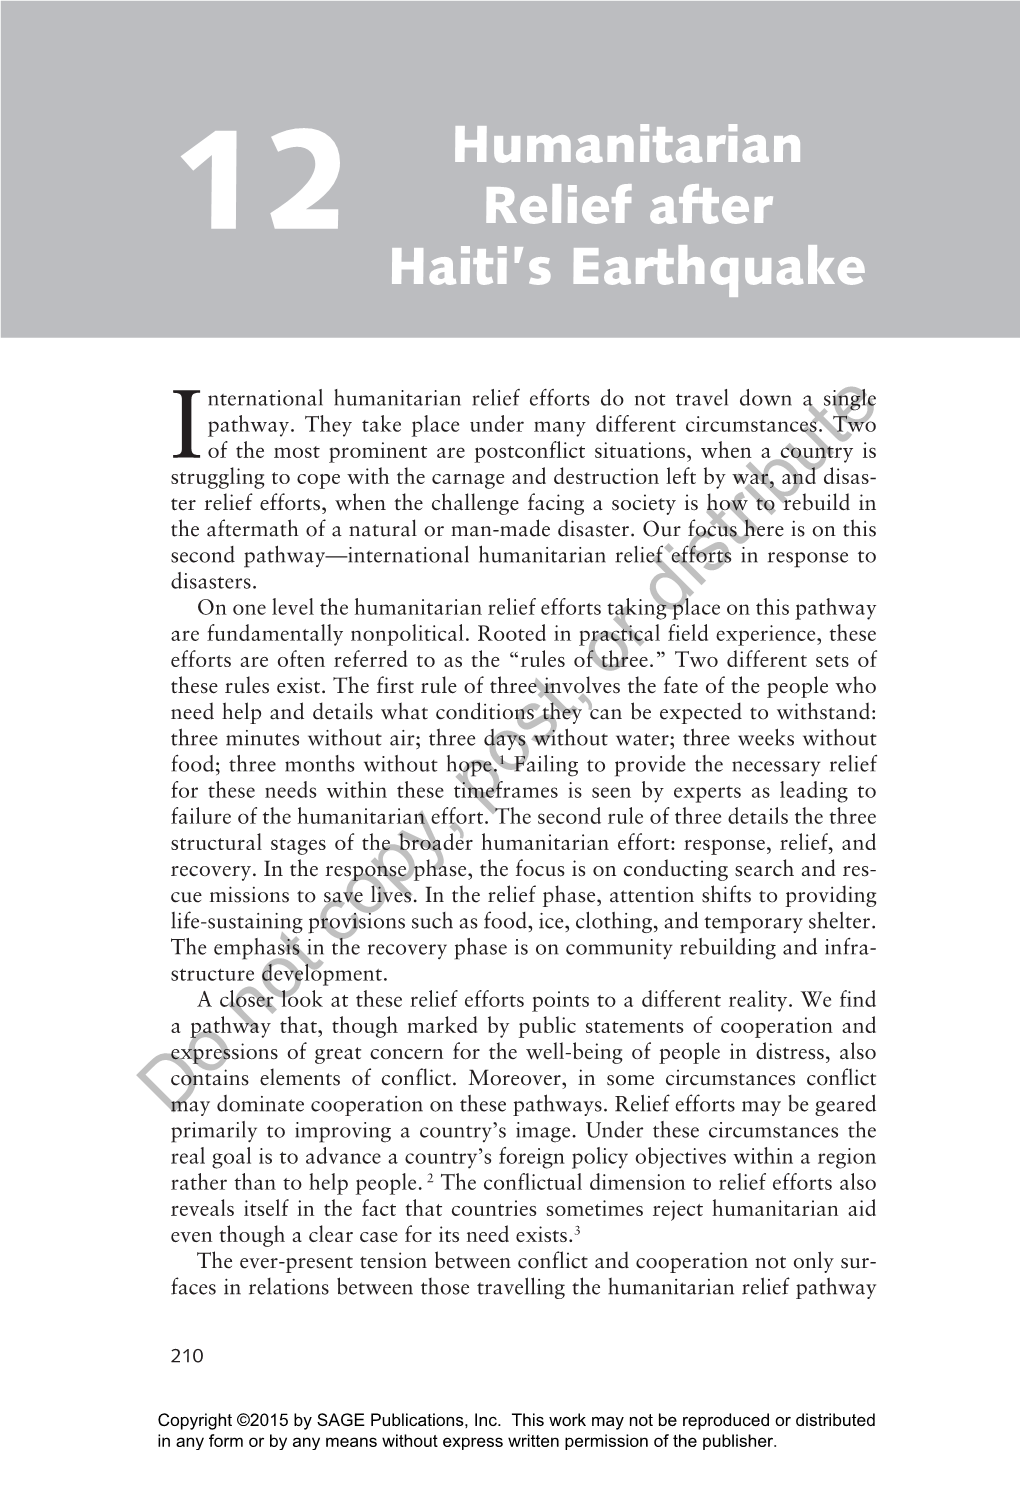 Humanitarian Relief After Haiti's Earthquake